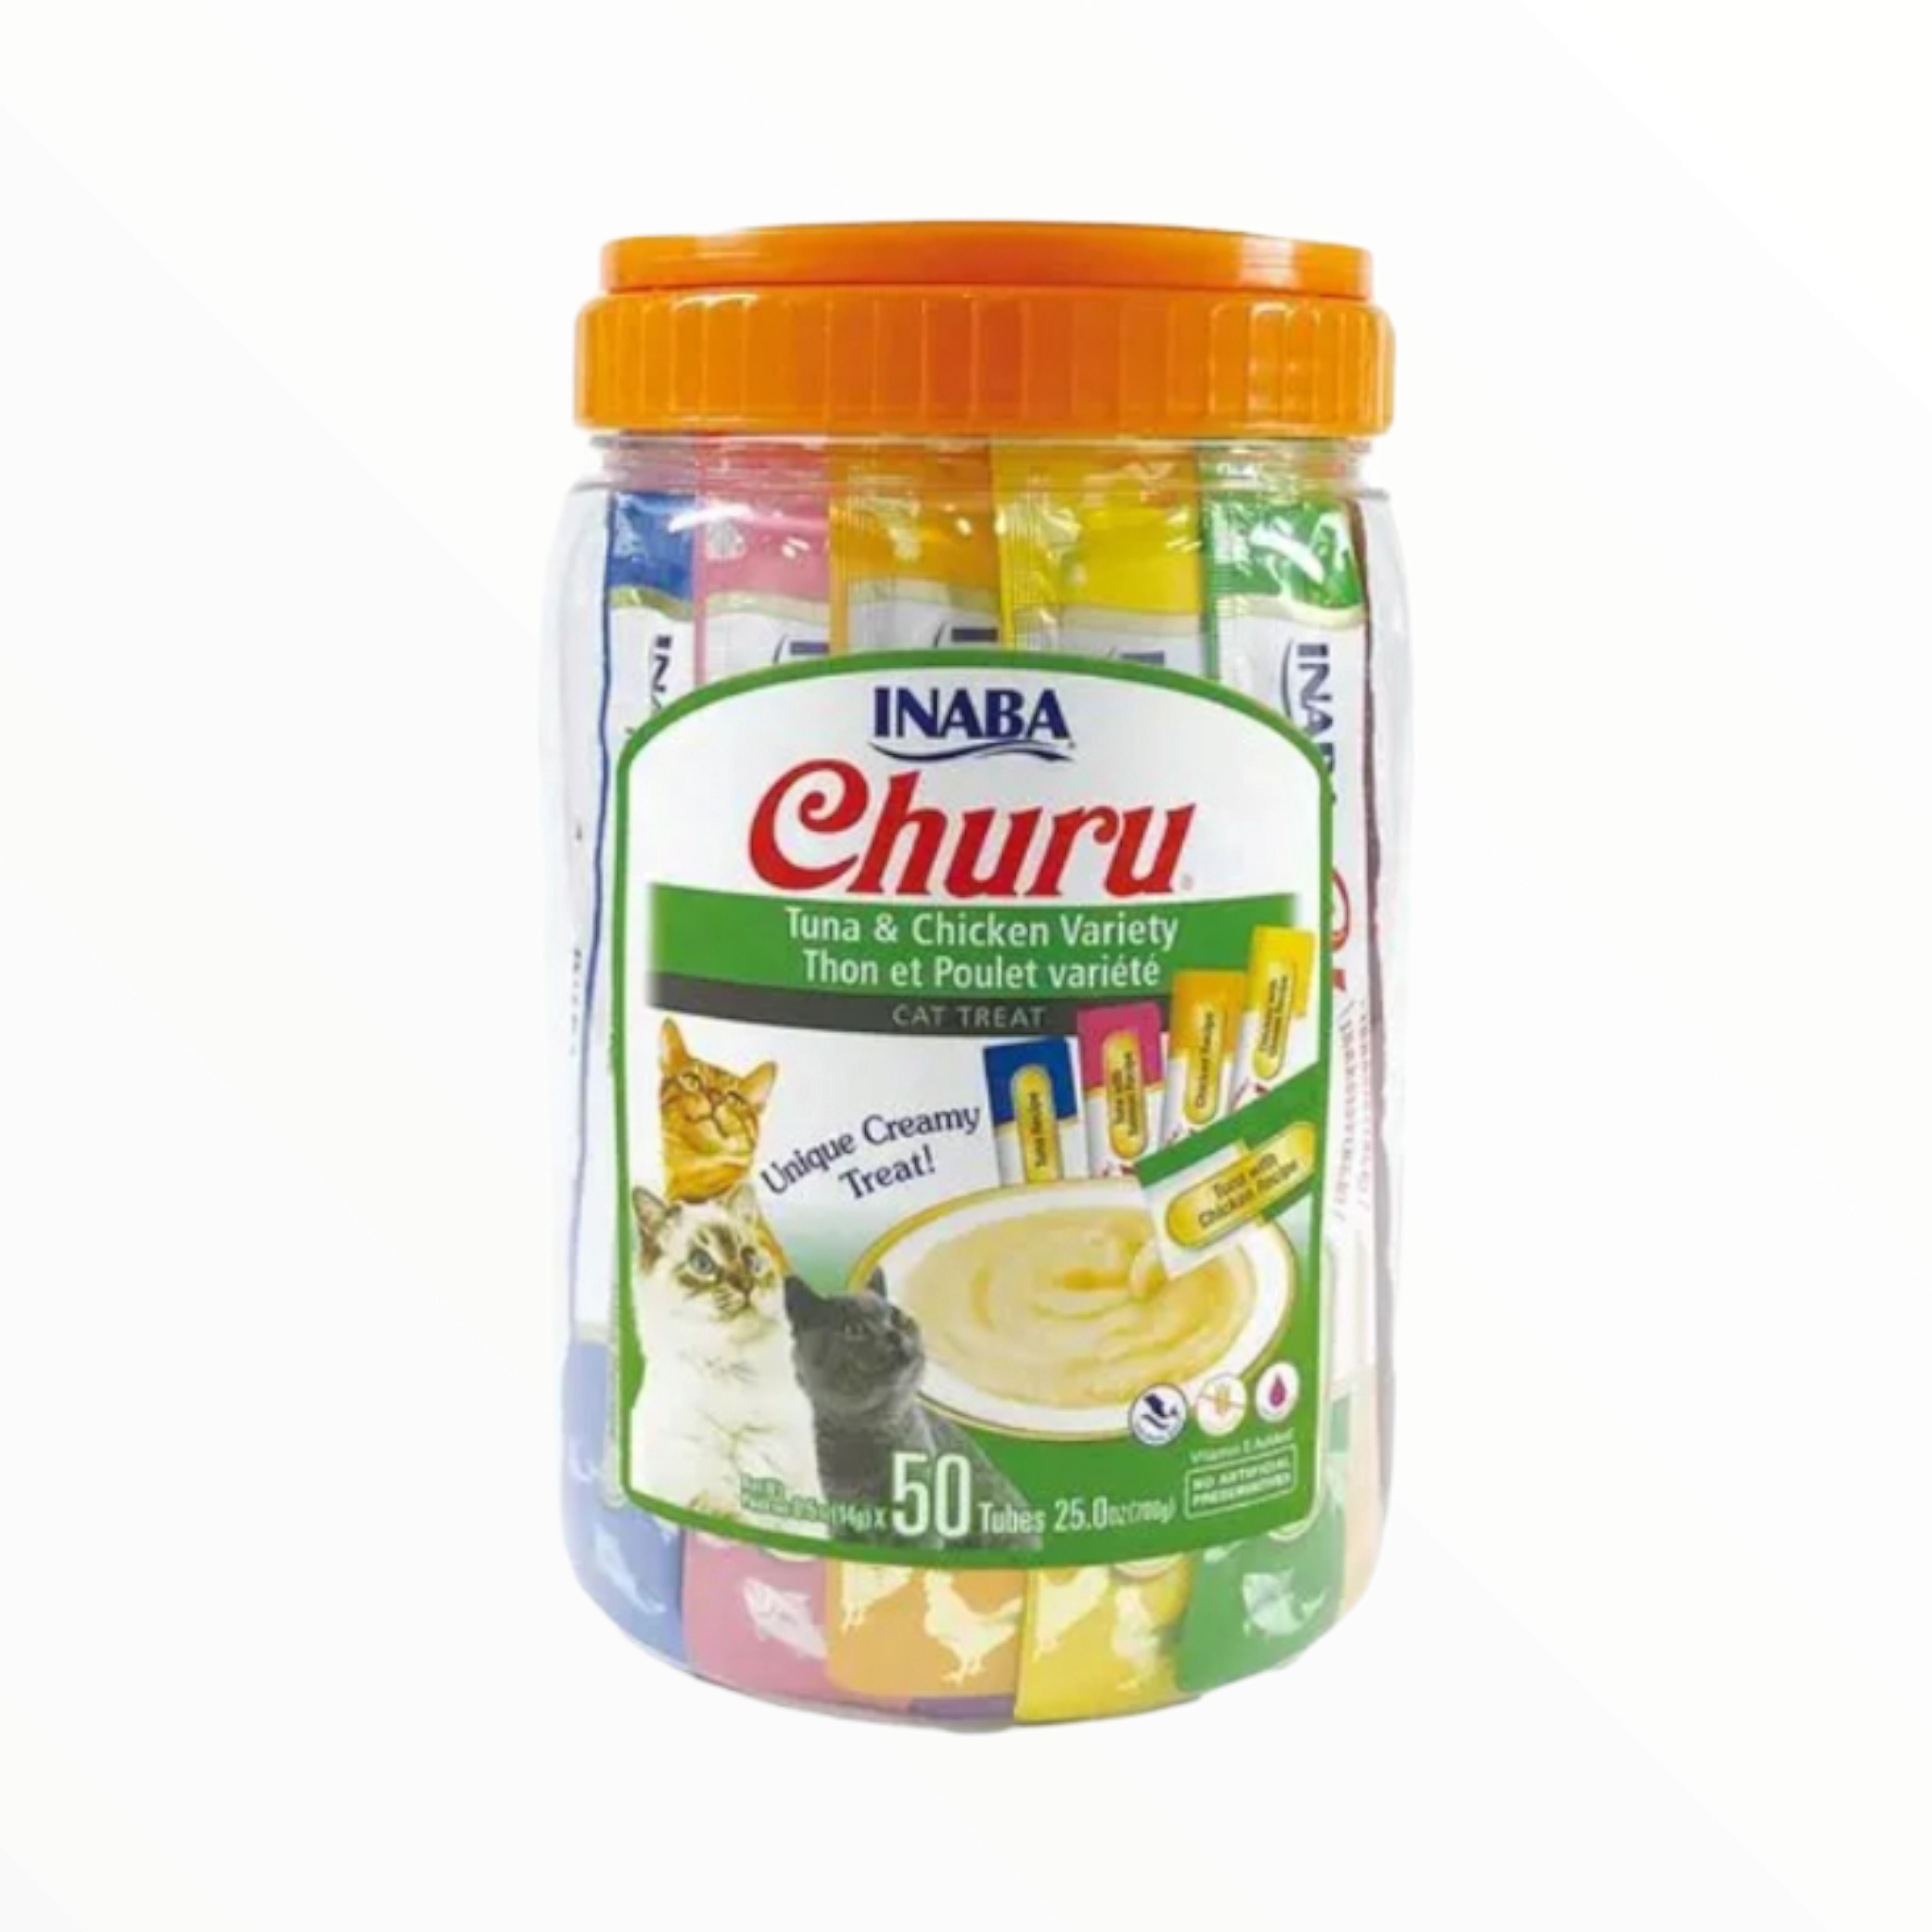 Churu crema variedades Atun y pollo